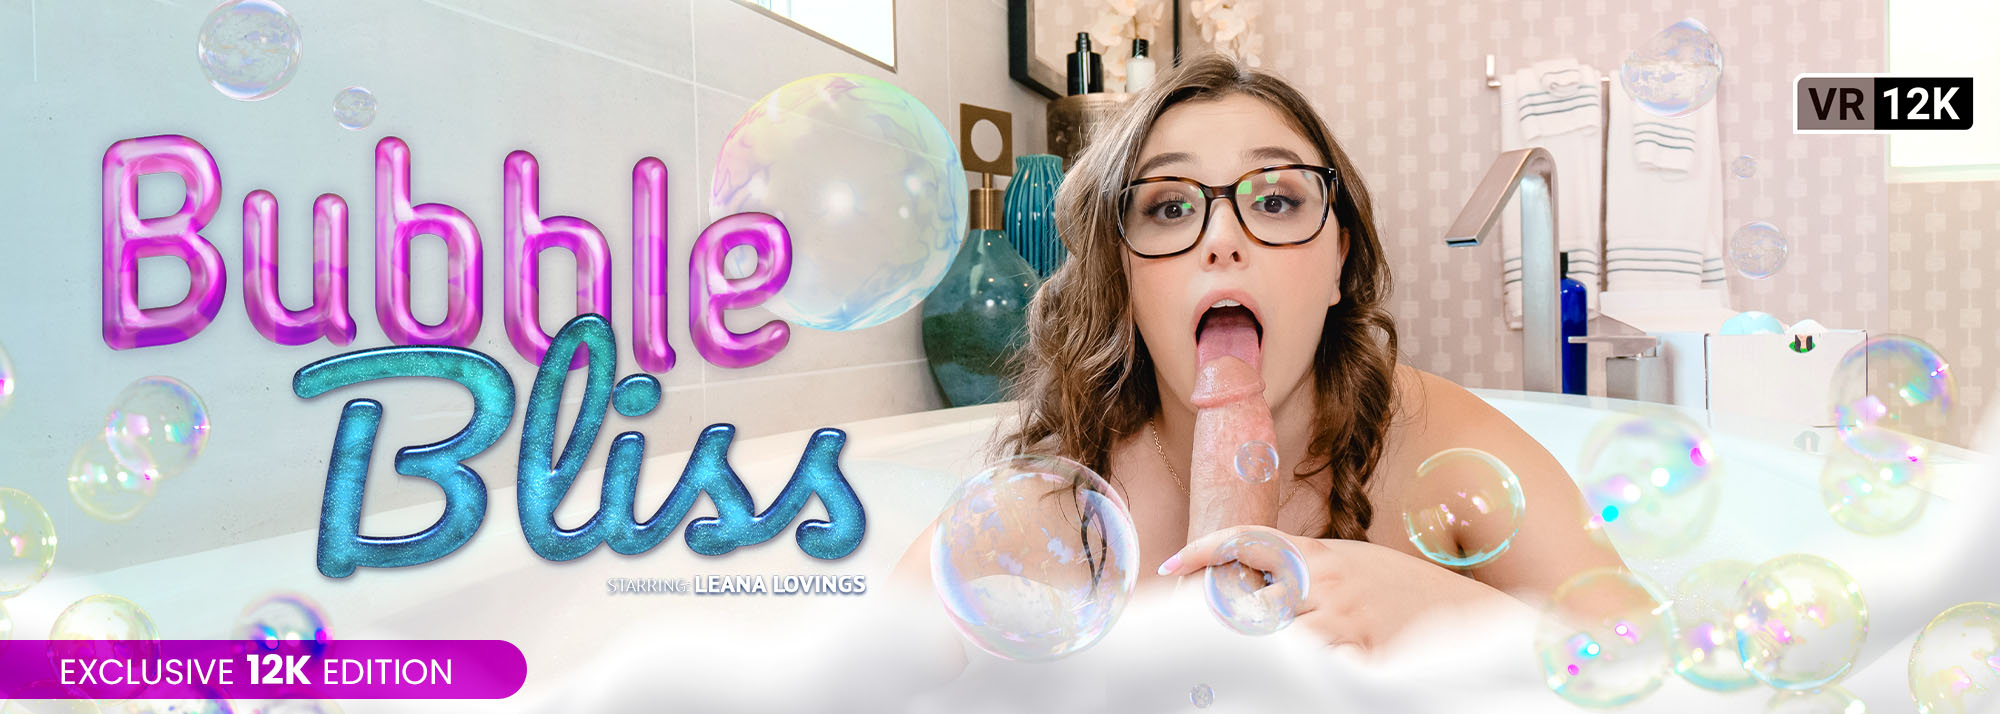 Bubble Bliss - VR Porn Video, Starring: Leana Lovings